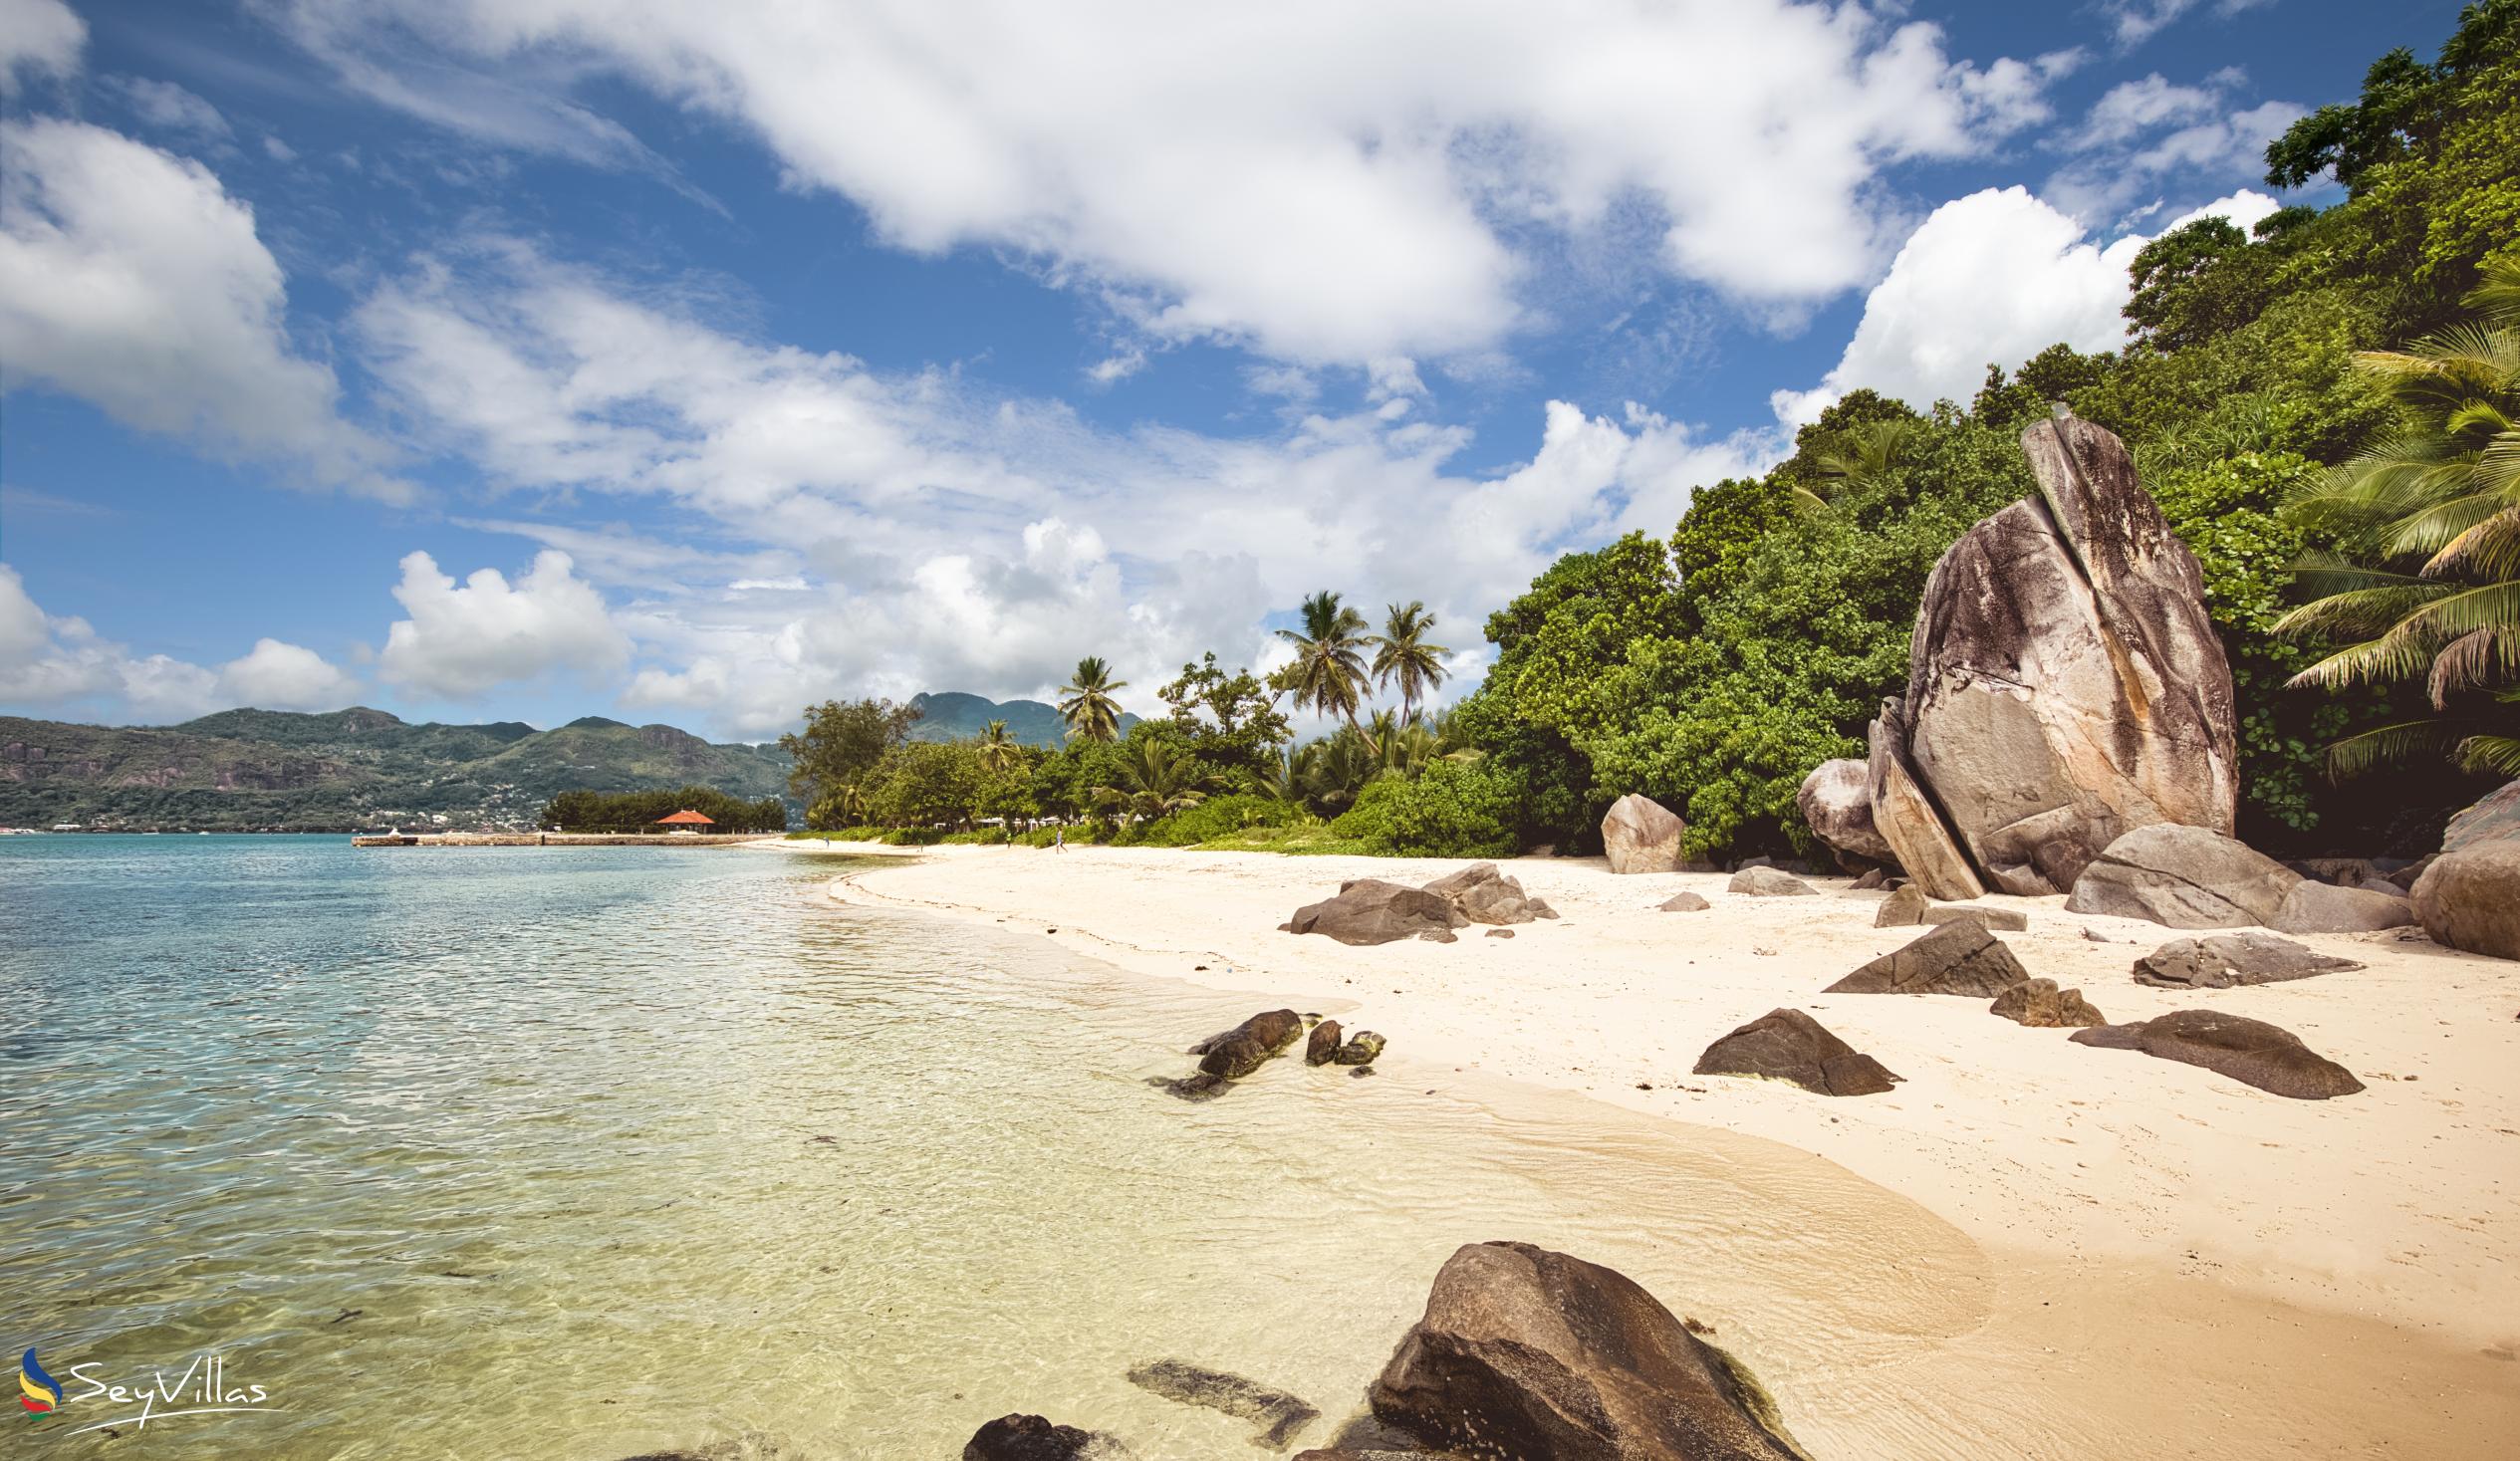 Foto 42: Club Med Seychelles - Posizione - Saint Anne (Seychelles)